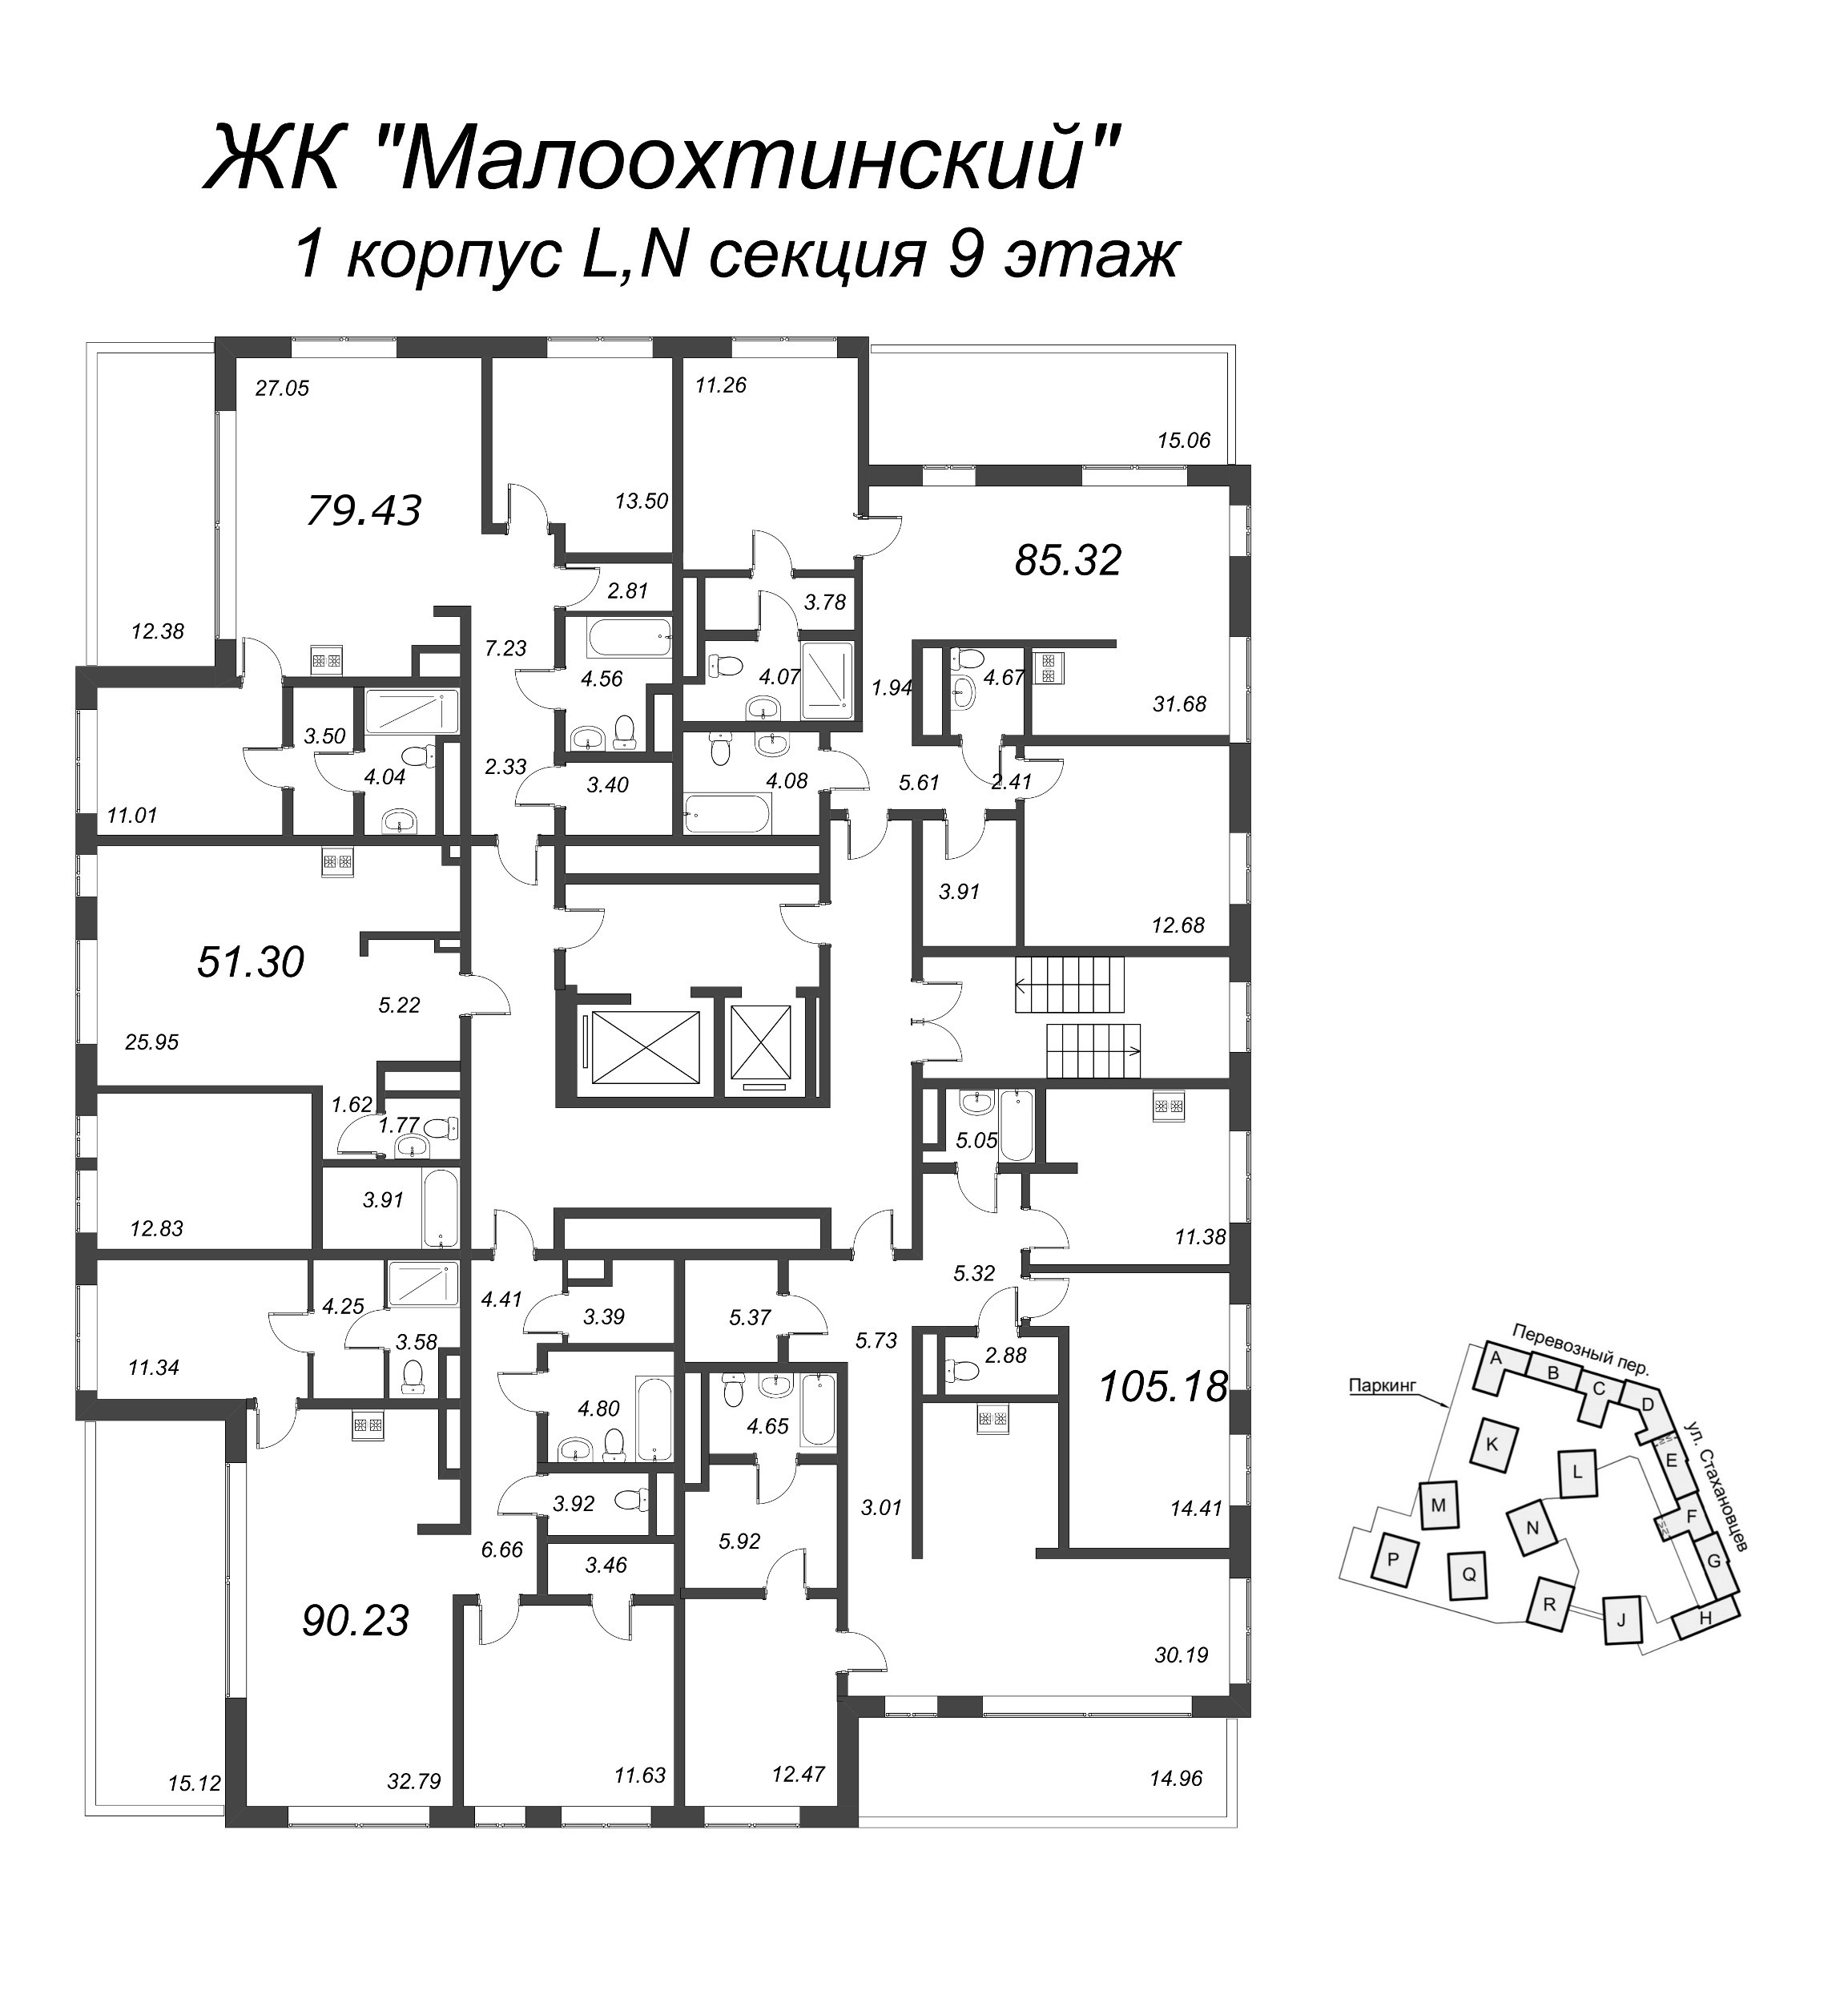 2-комнатная (Евро) квартира, 54.4 м² - планировка этажа